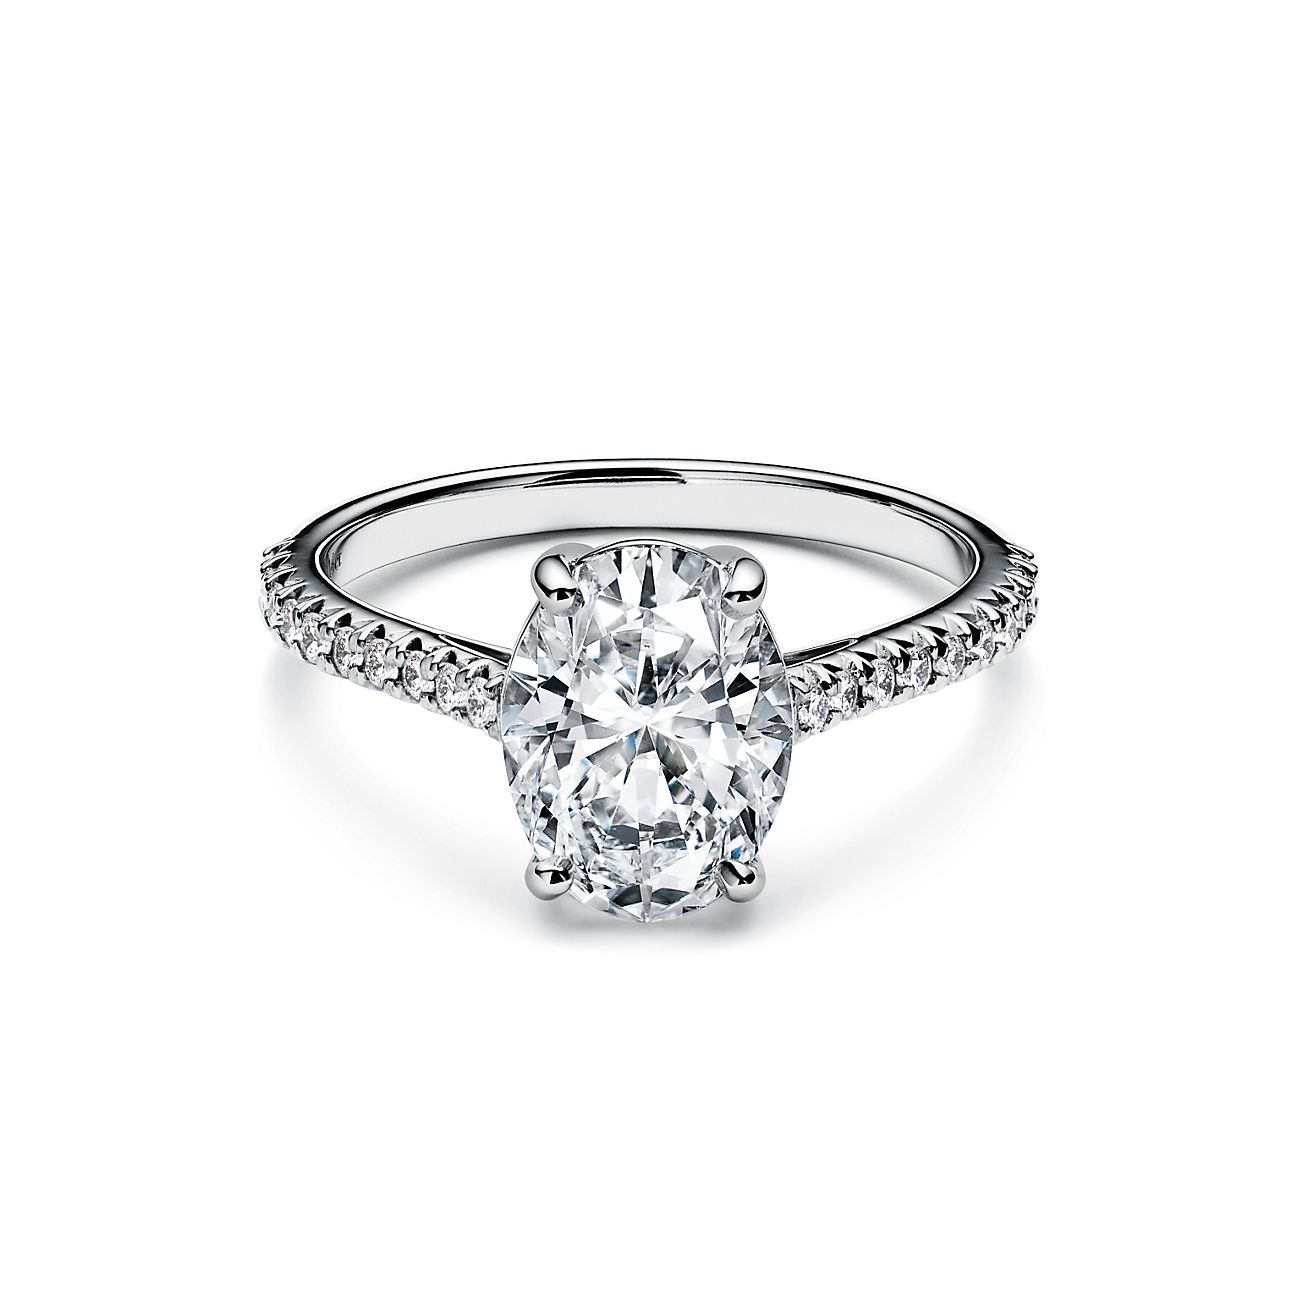 Tiffany six prong set diamond ring Source:Wedding bands -Wedding bands... |  Download Scientific Diagram